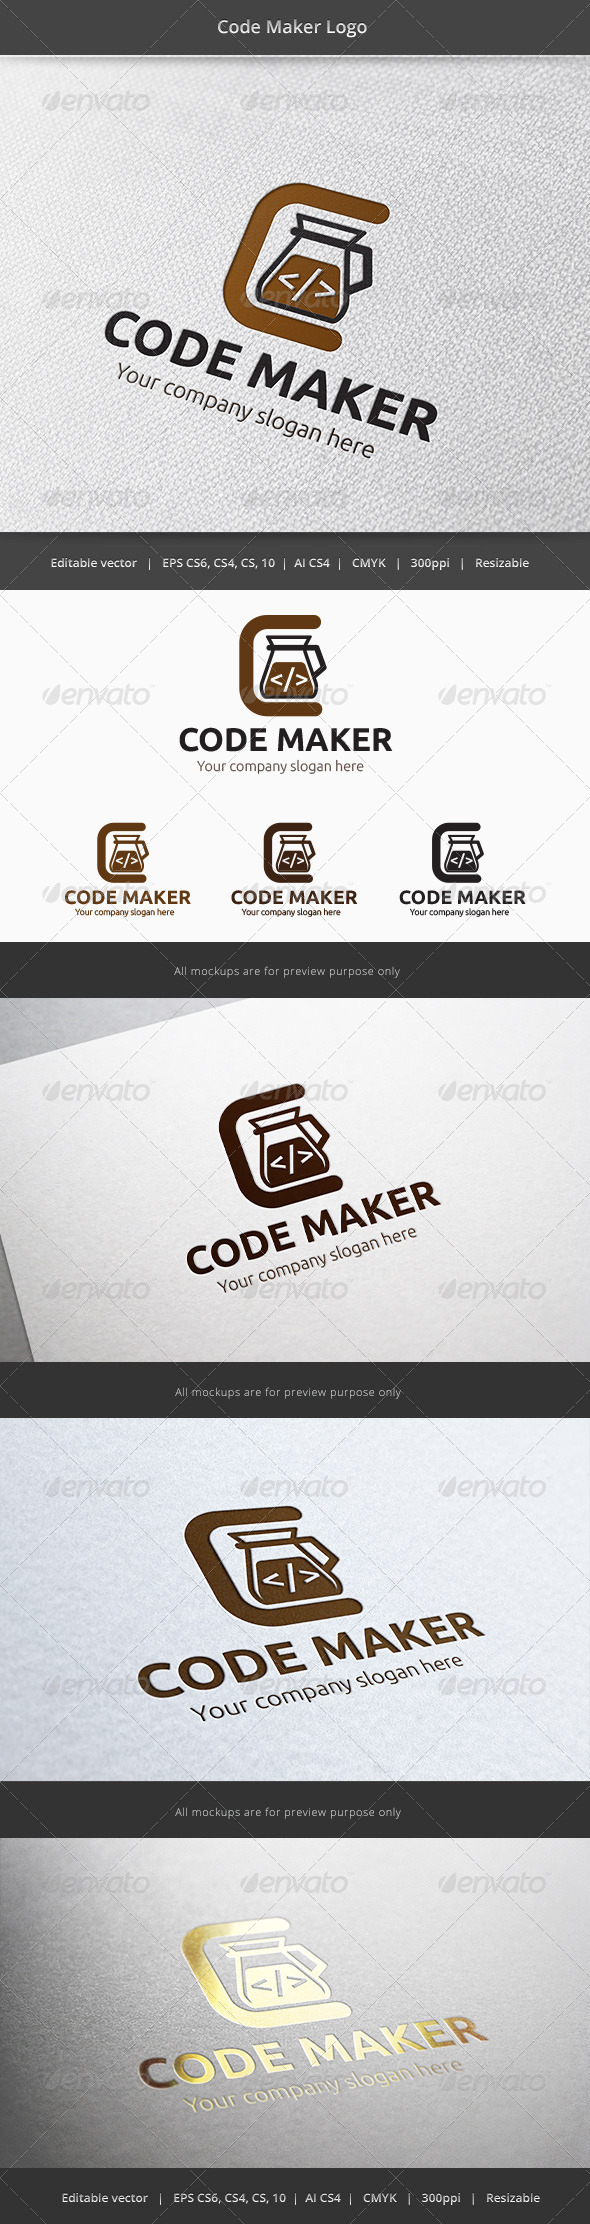 Code Maker Coffee Machine Logo